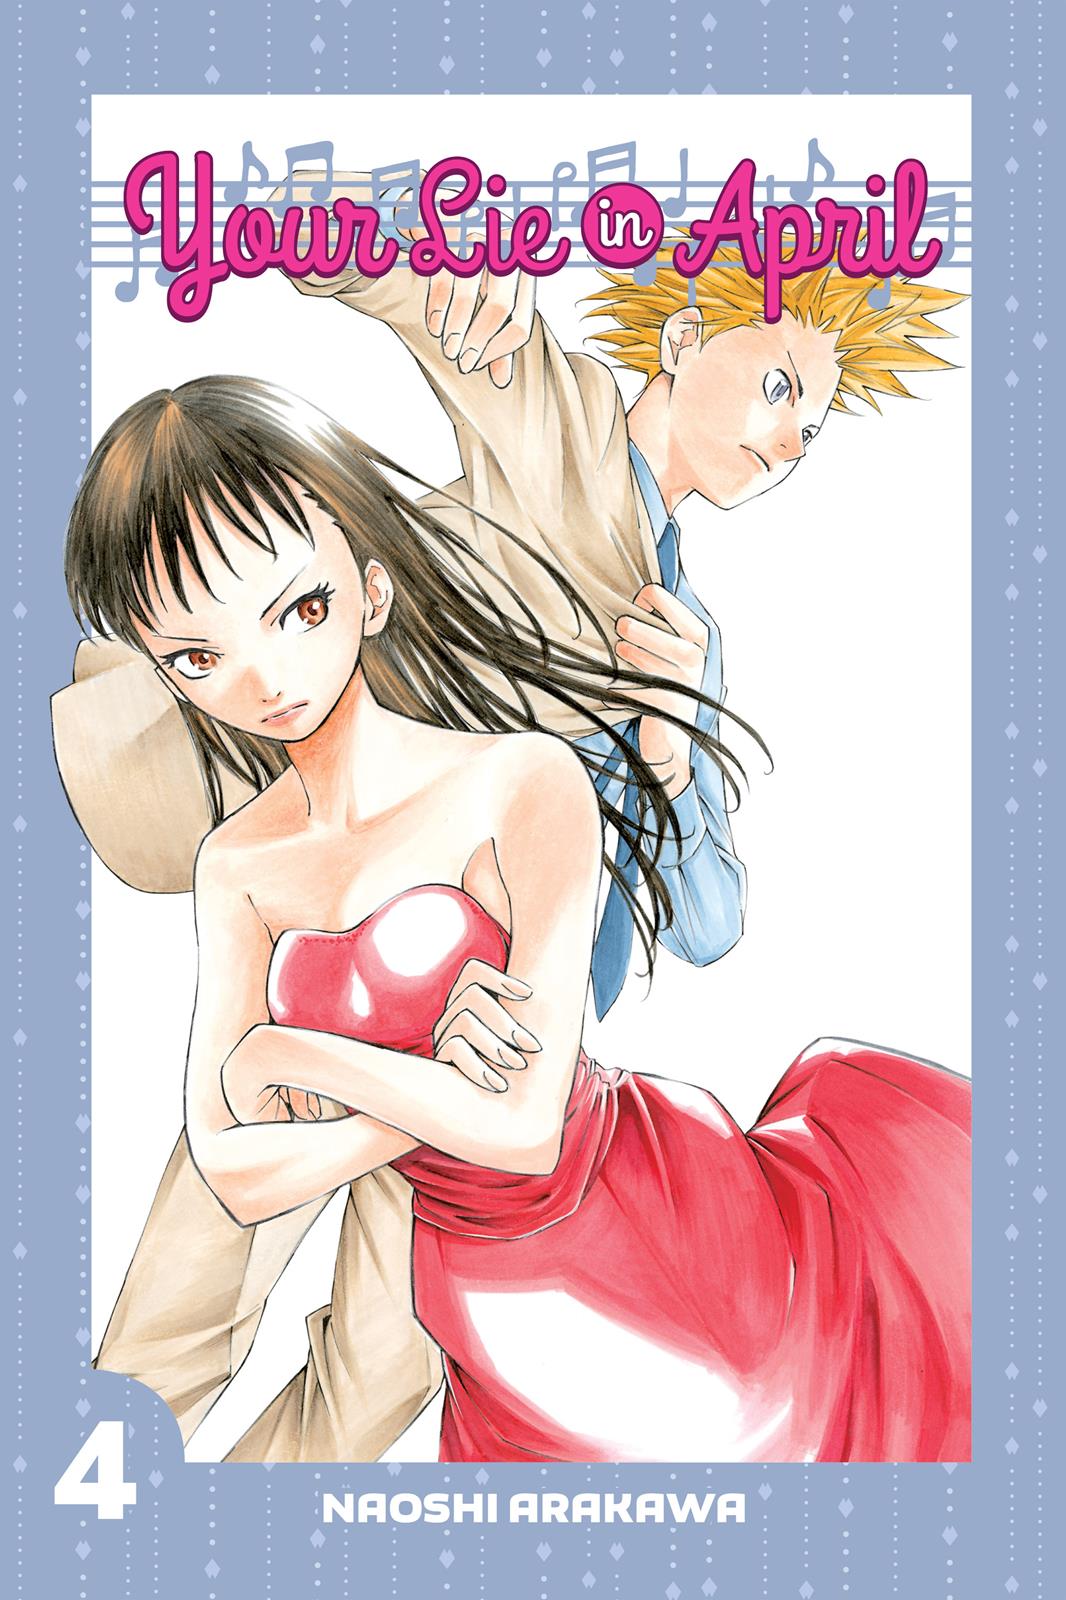 Kaori's Proposal. An Essay On Anime Series, Shigatsu Wa…